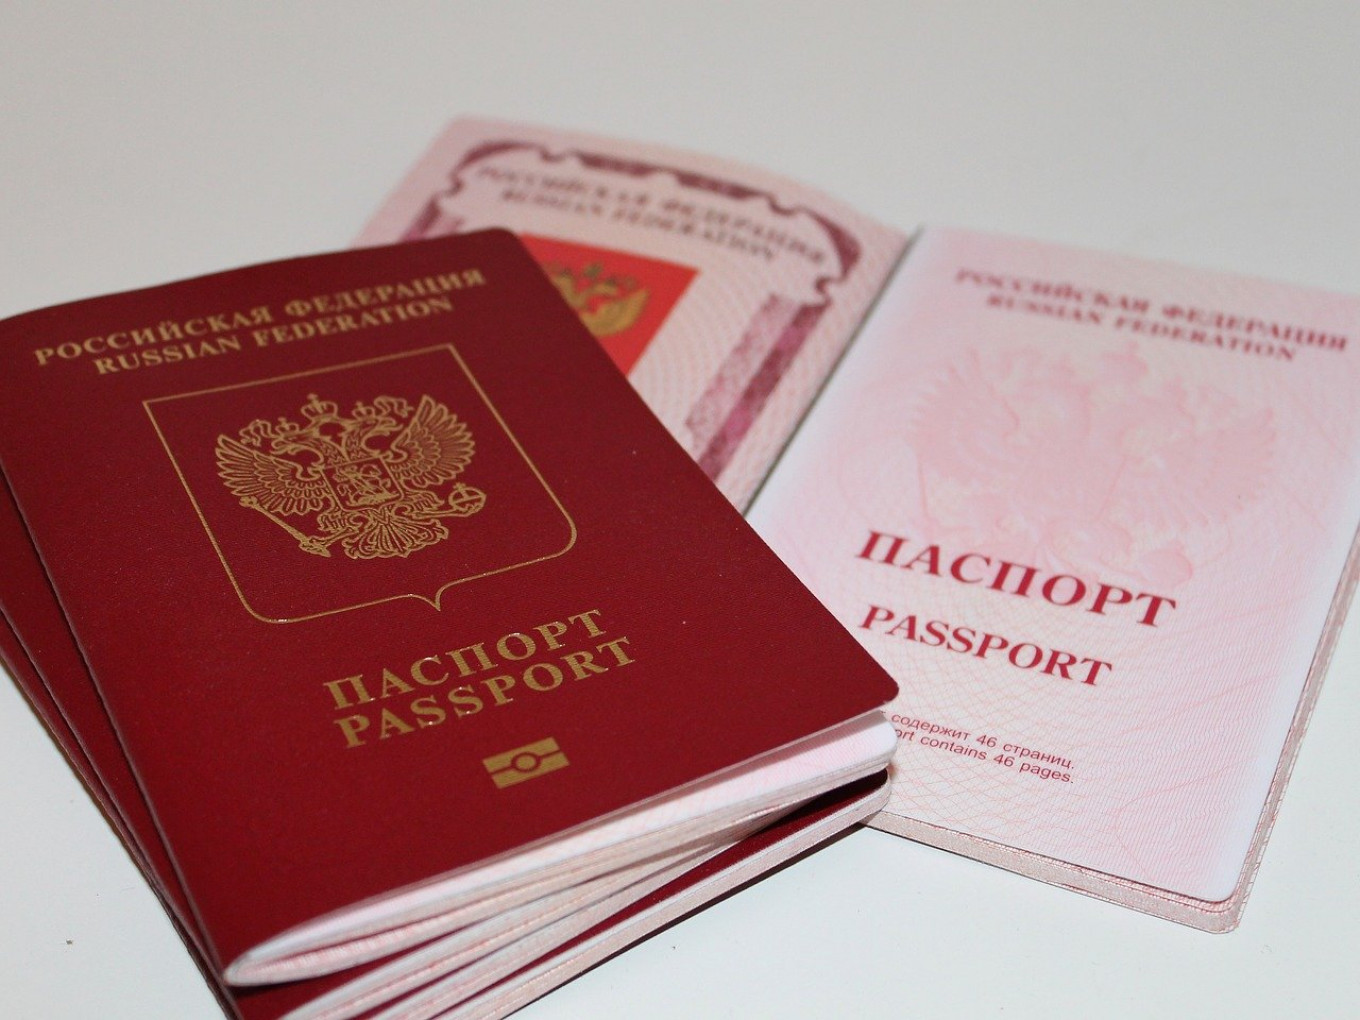 Russia Falls in 2020 World Passport Ranking